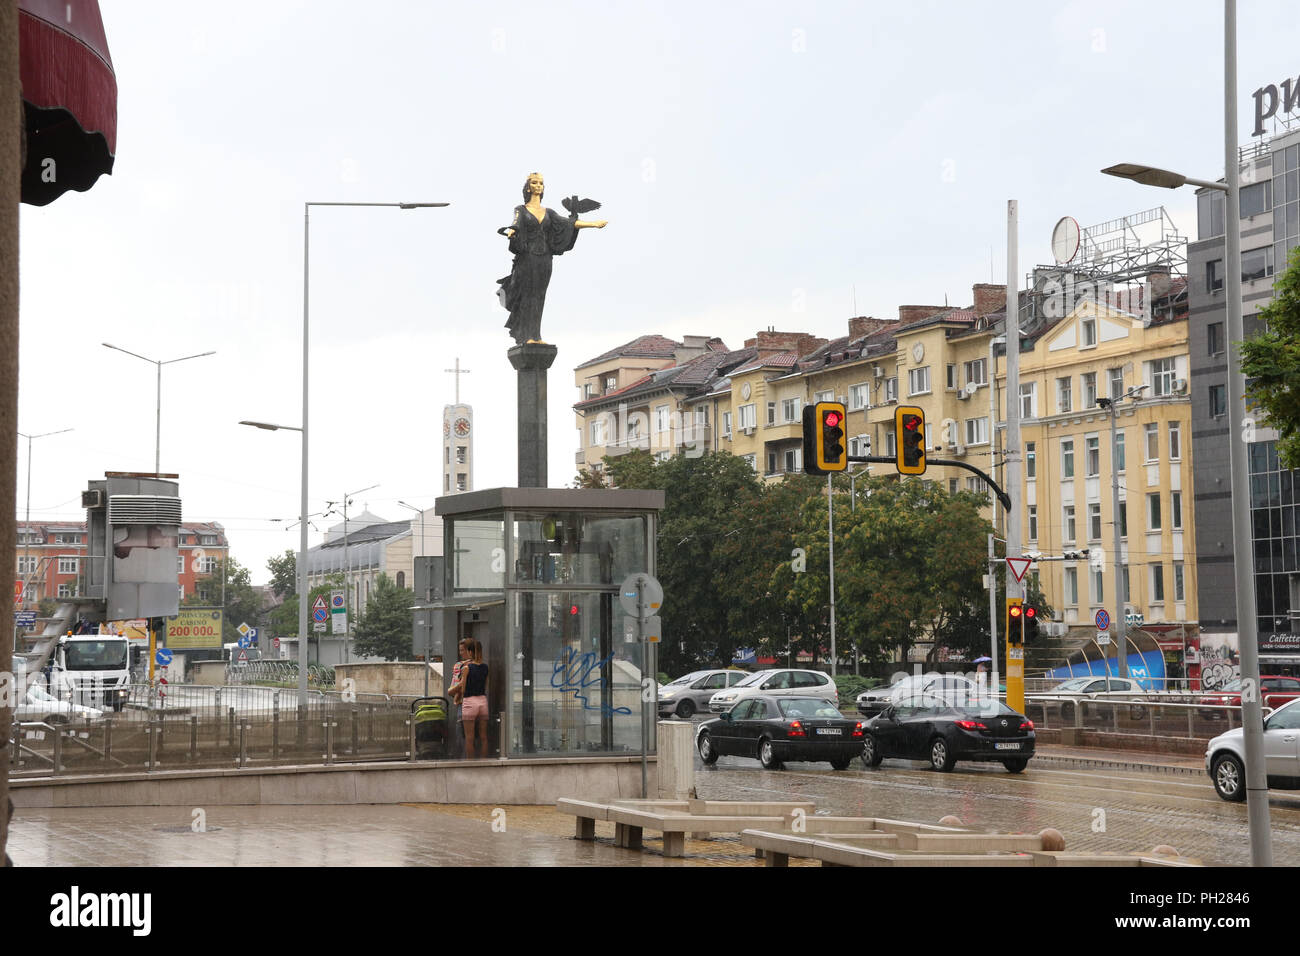 Statua di Sveta Sofia, Piazza Nezavisimost, Largo, Sofia, Bulgaria. Foto Stock